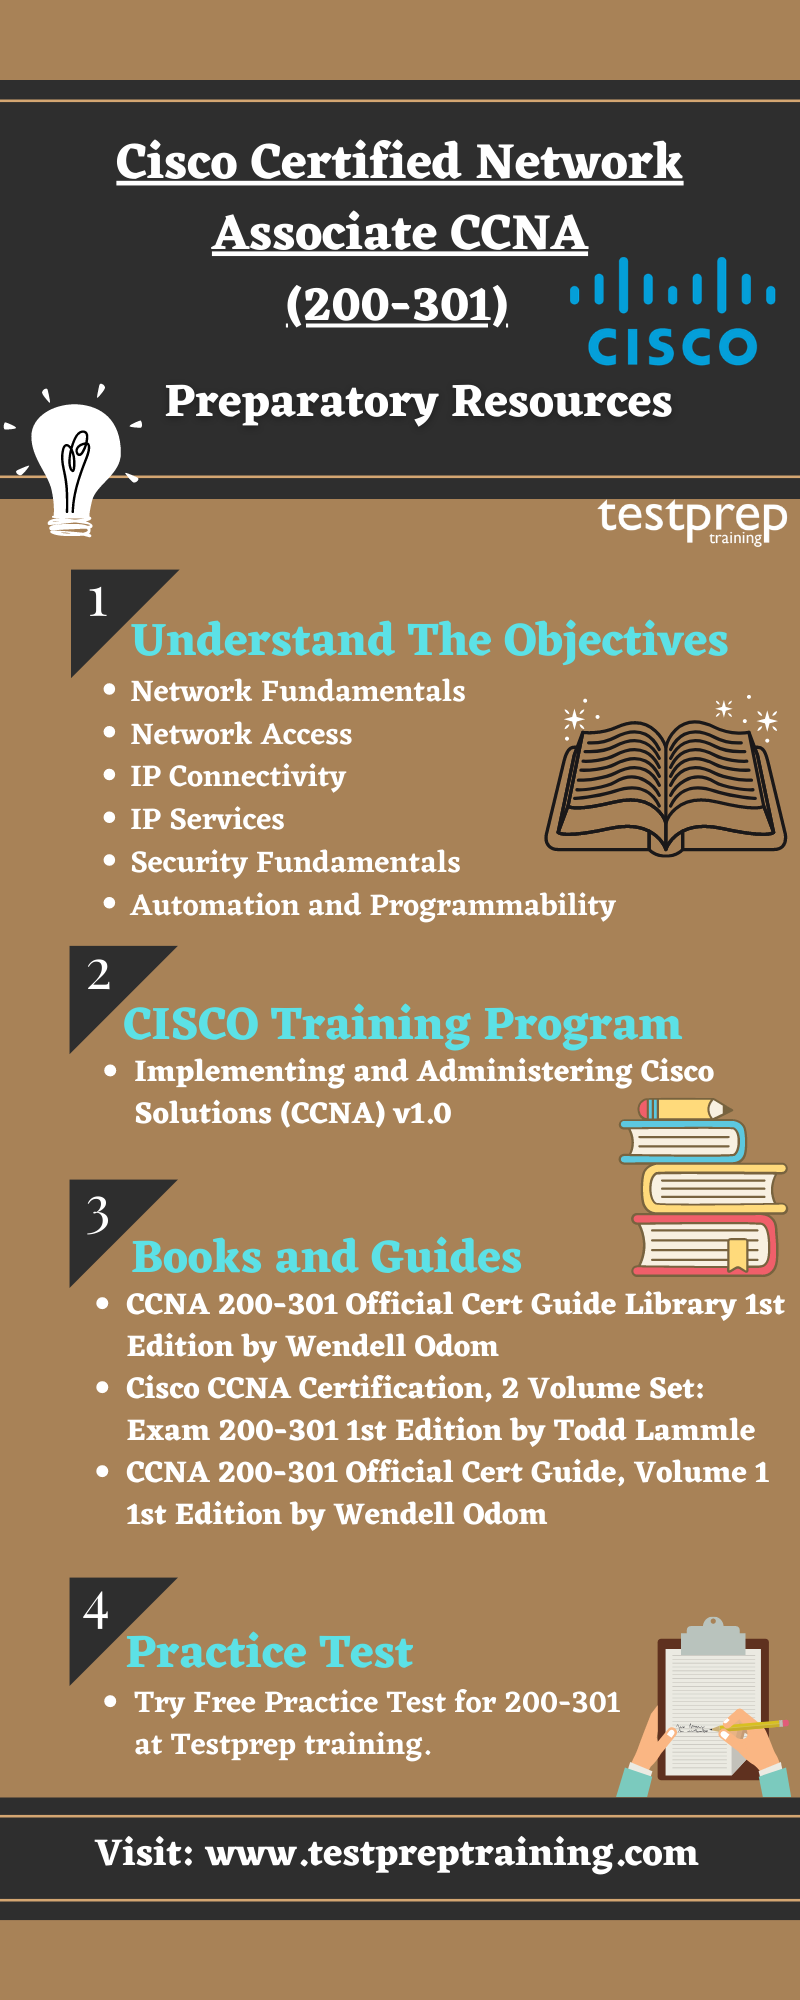 Cisco Certified Network Associate CCNA (200-301) preparatory resources